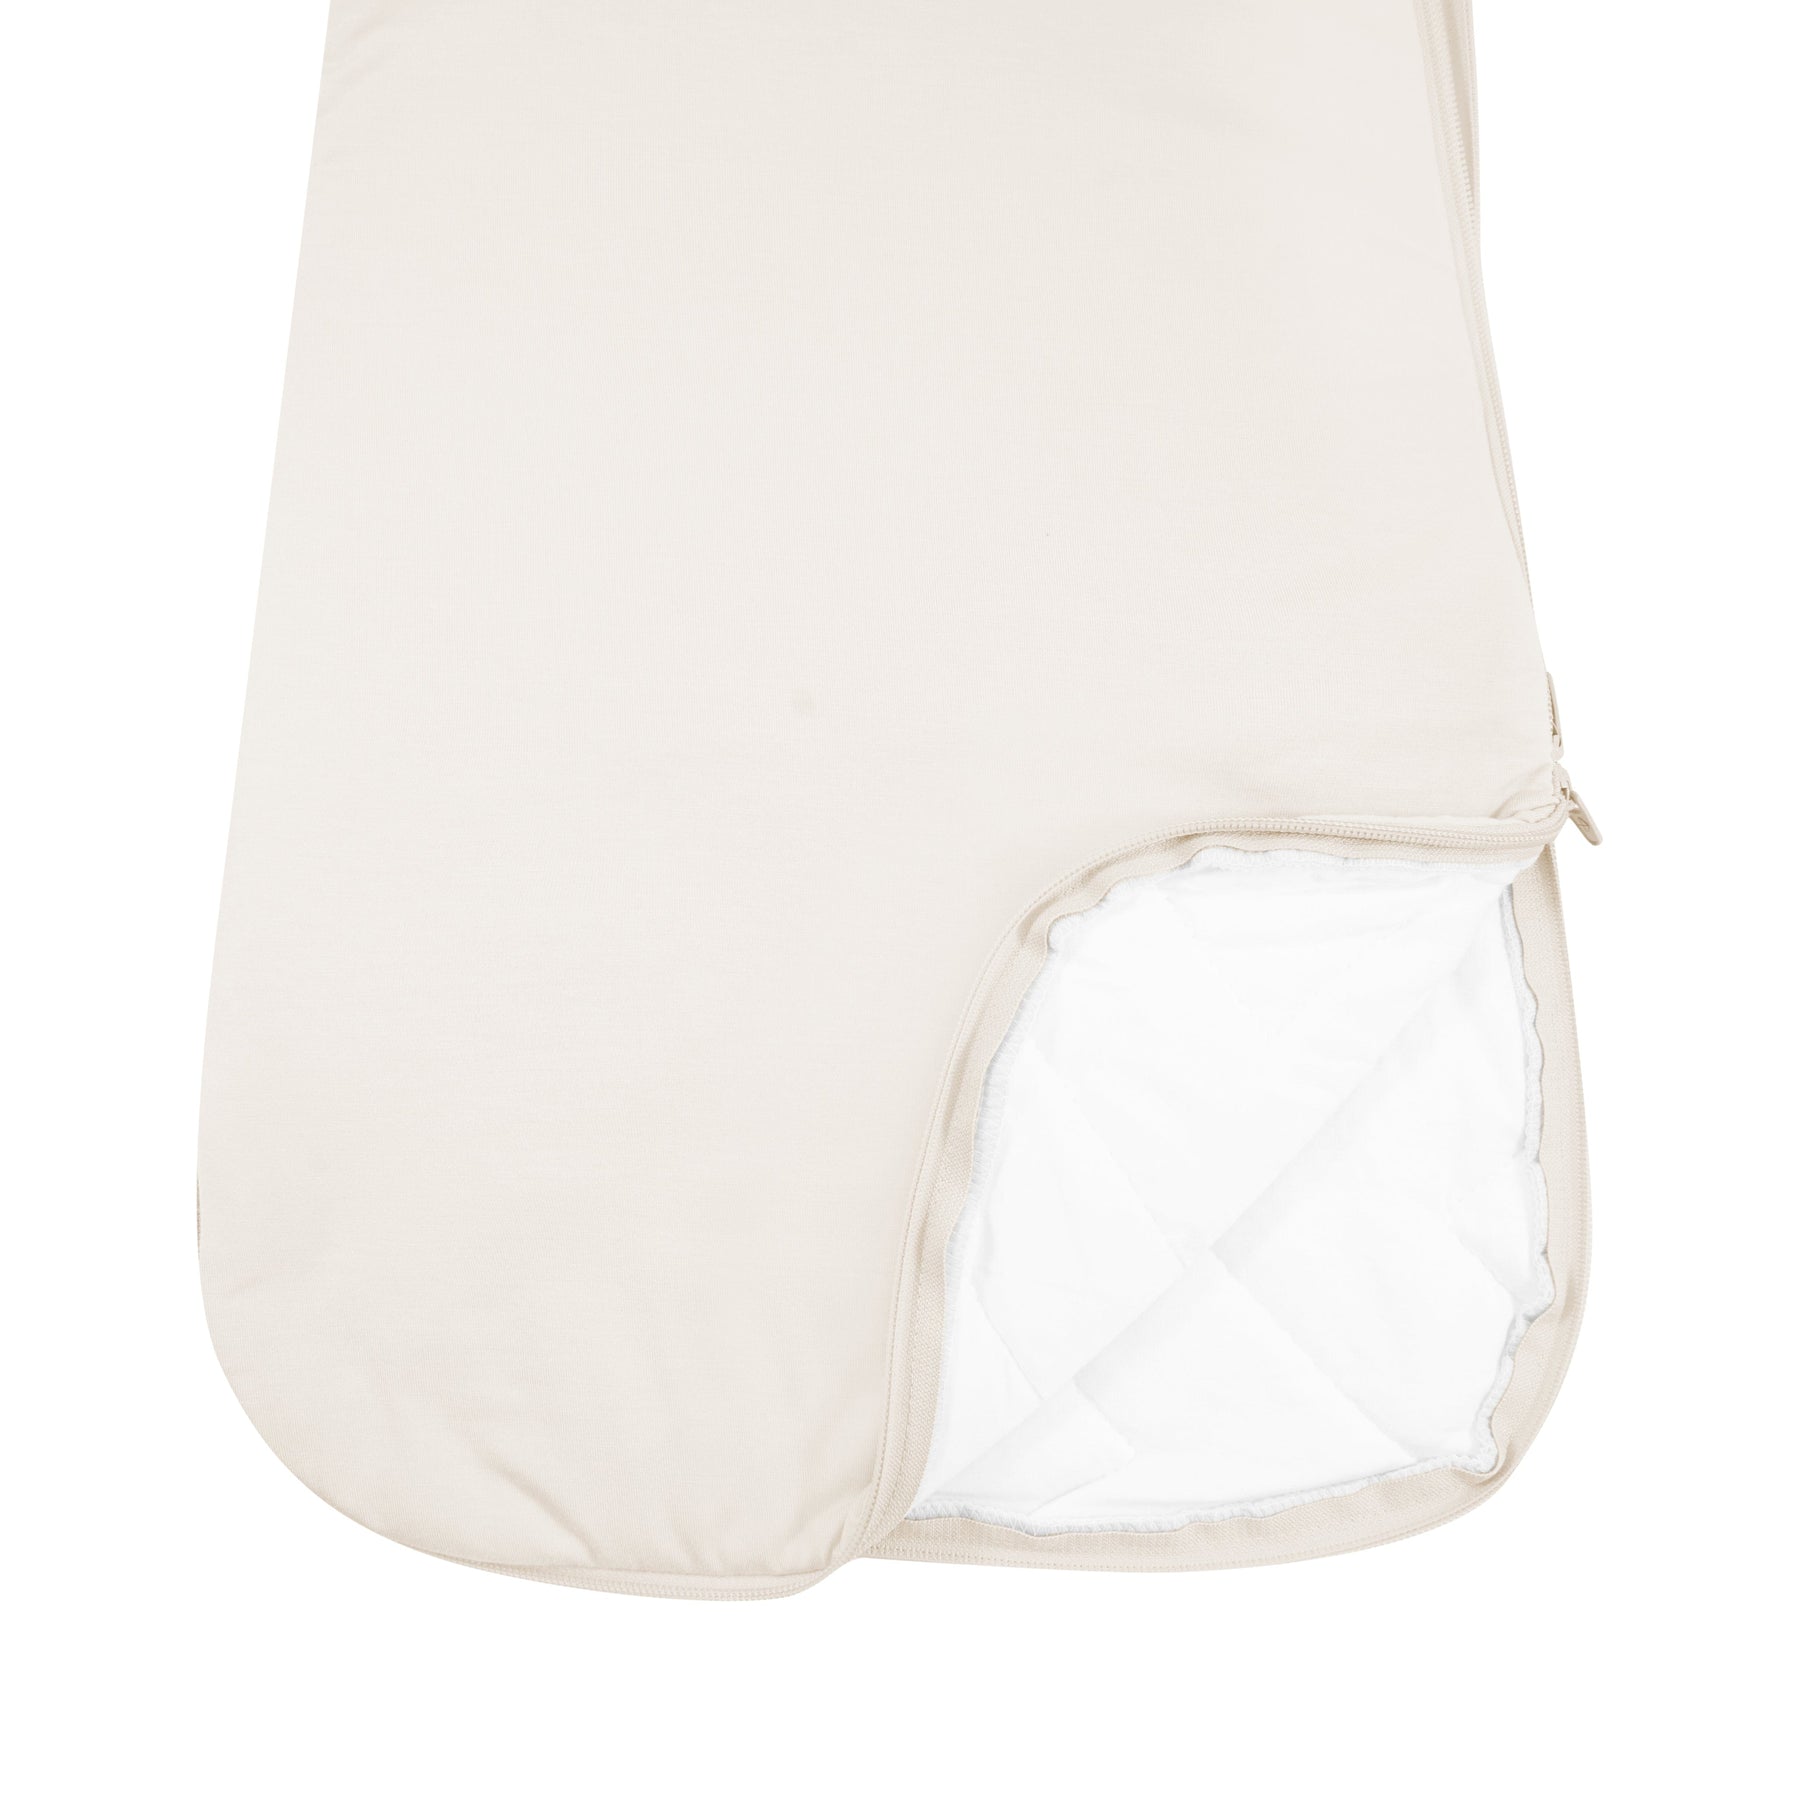 Kyte Baby bamboo Sleep Bag in Oat 2.5 double zipper